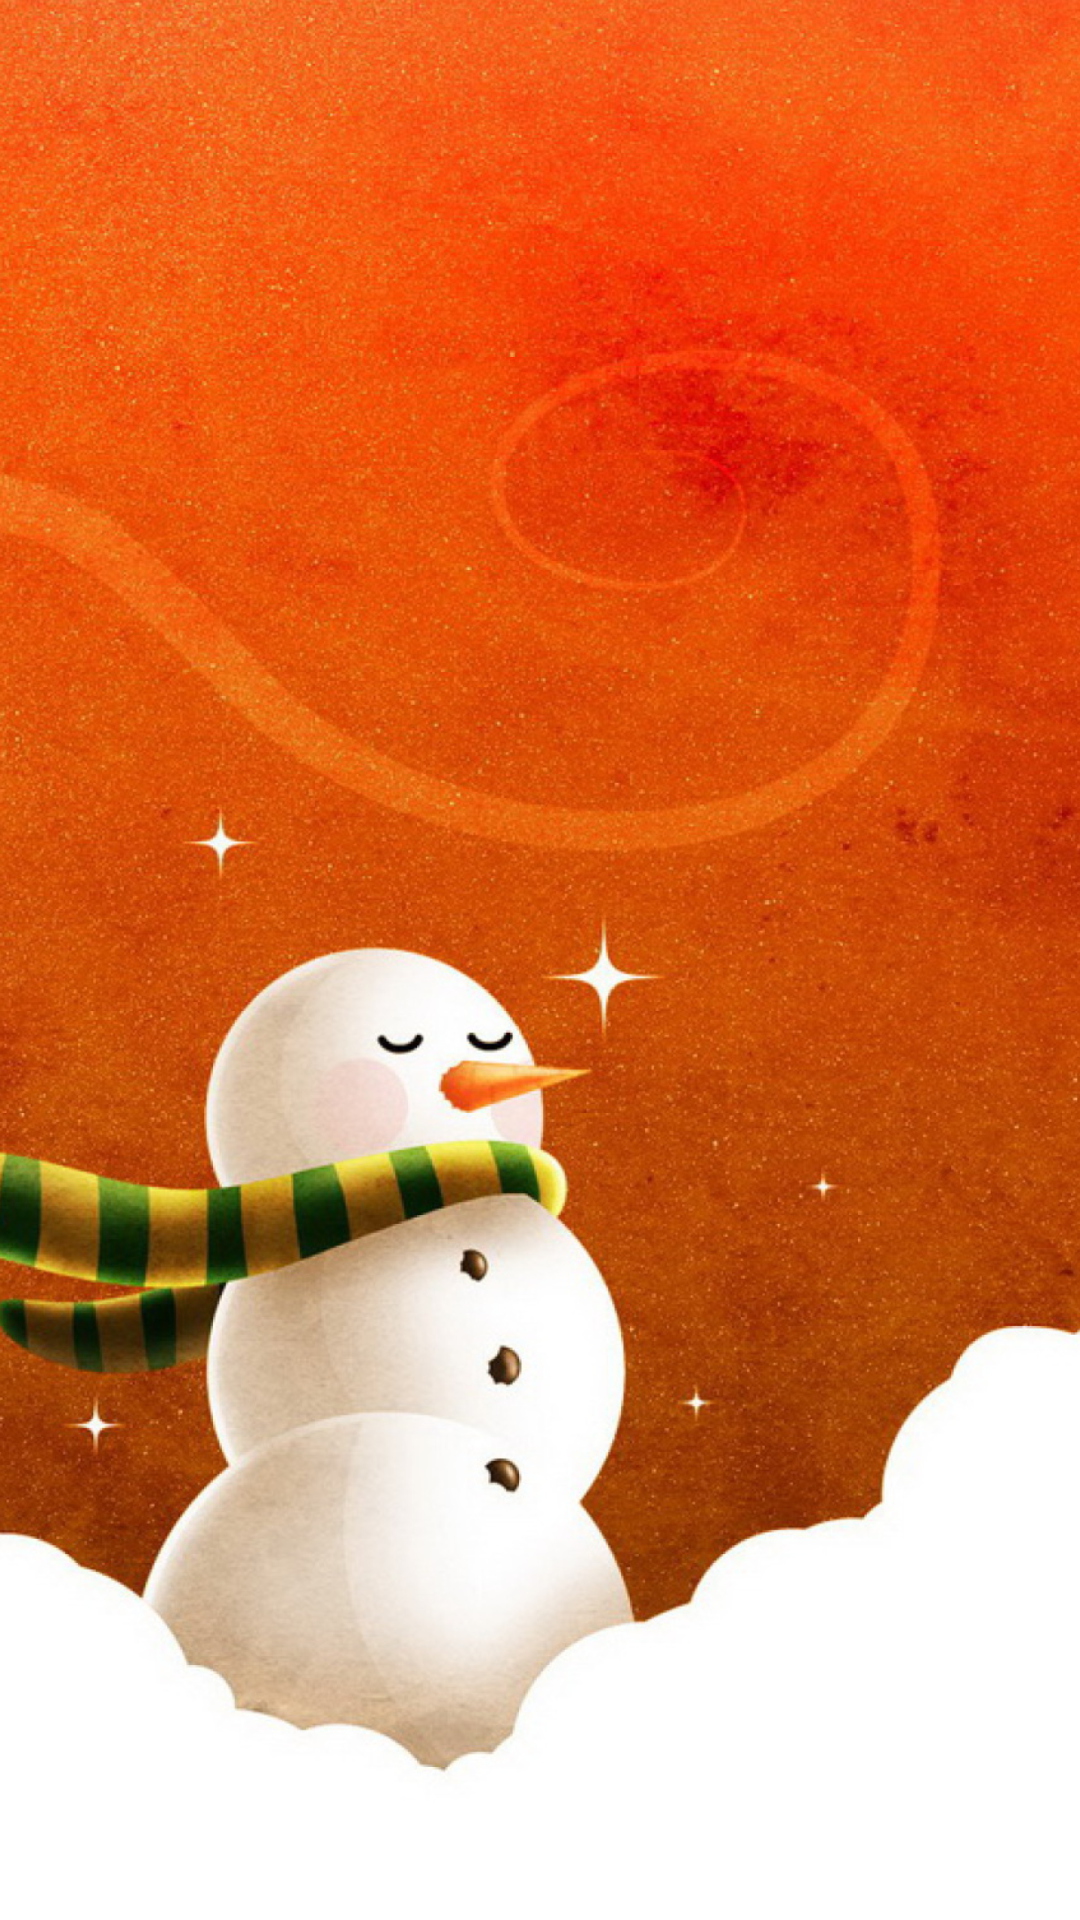 Snowman wallpaper 1080x1920